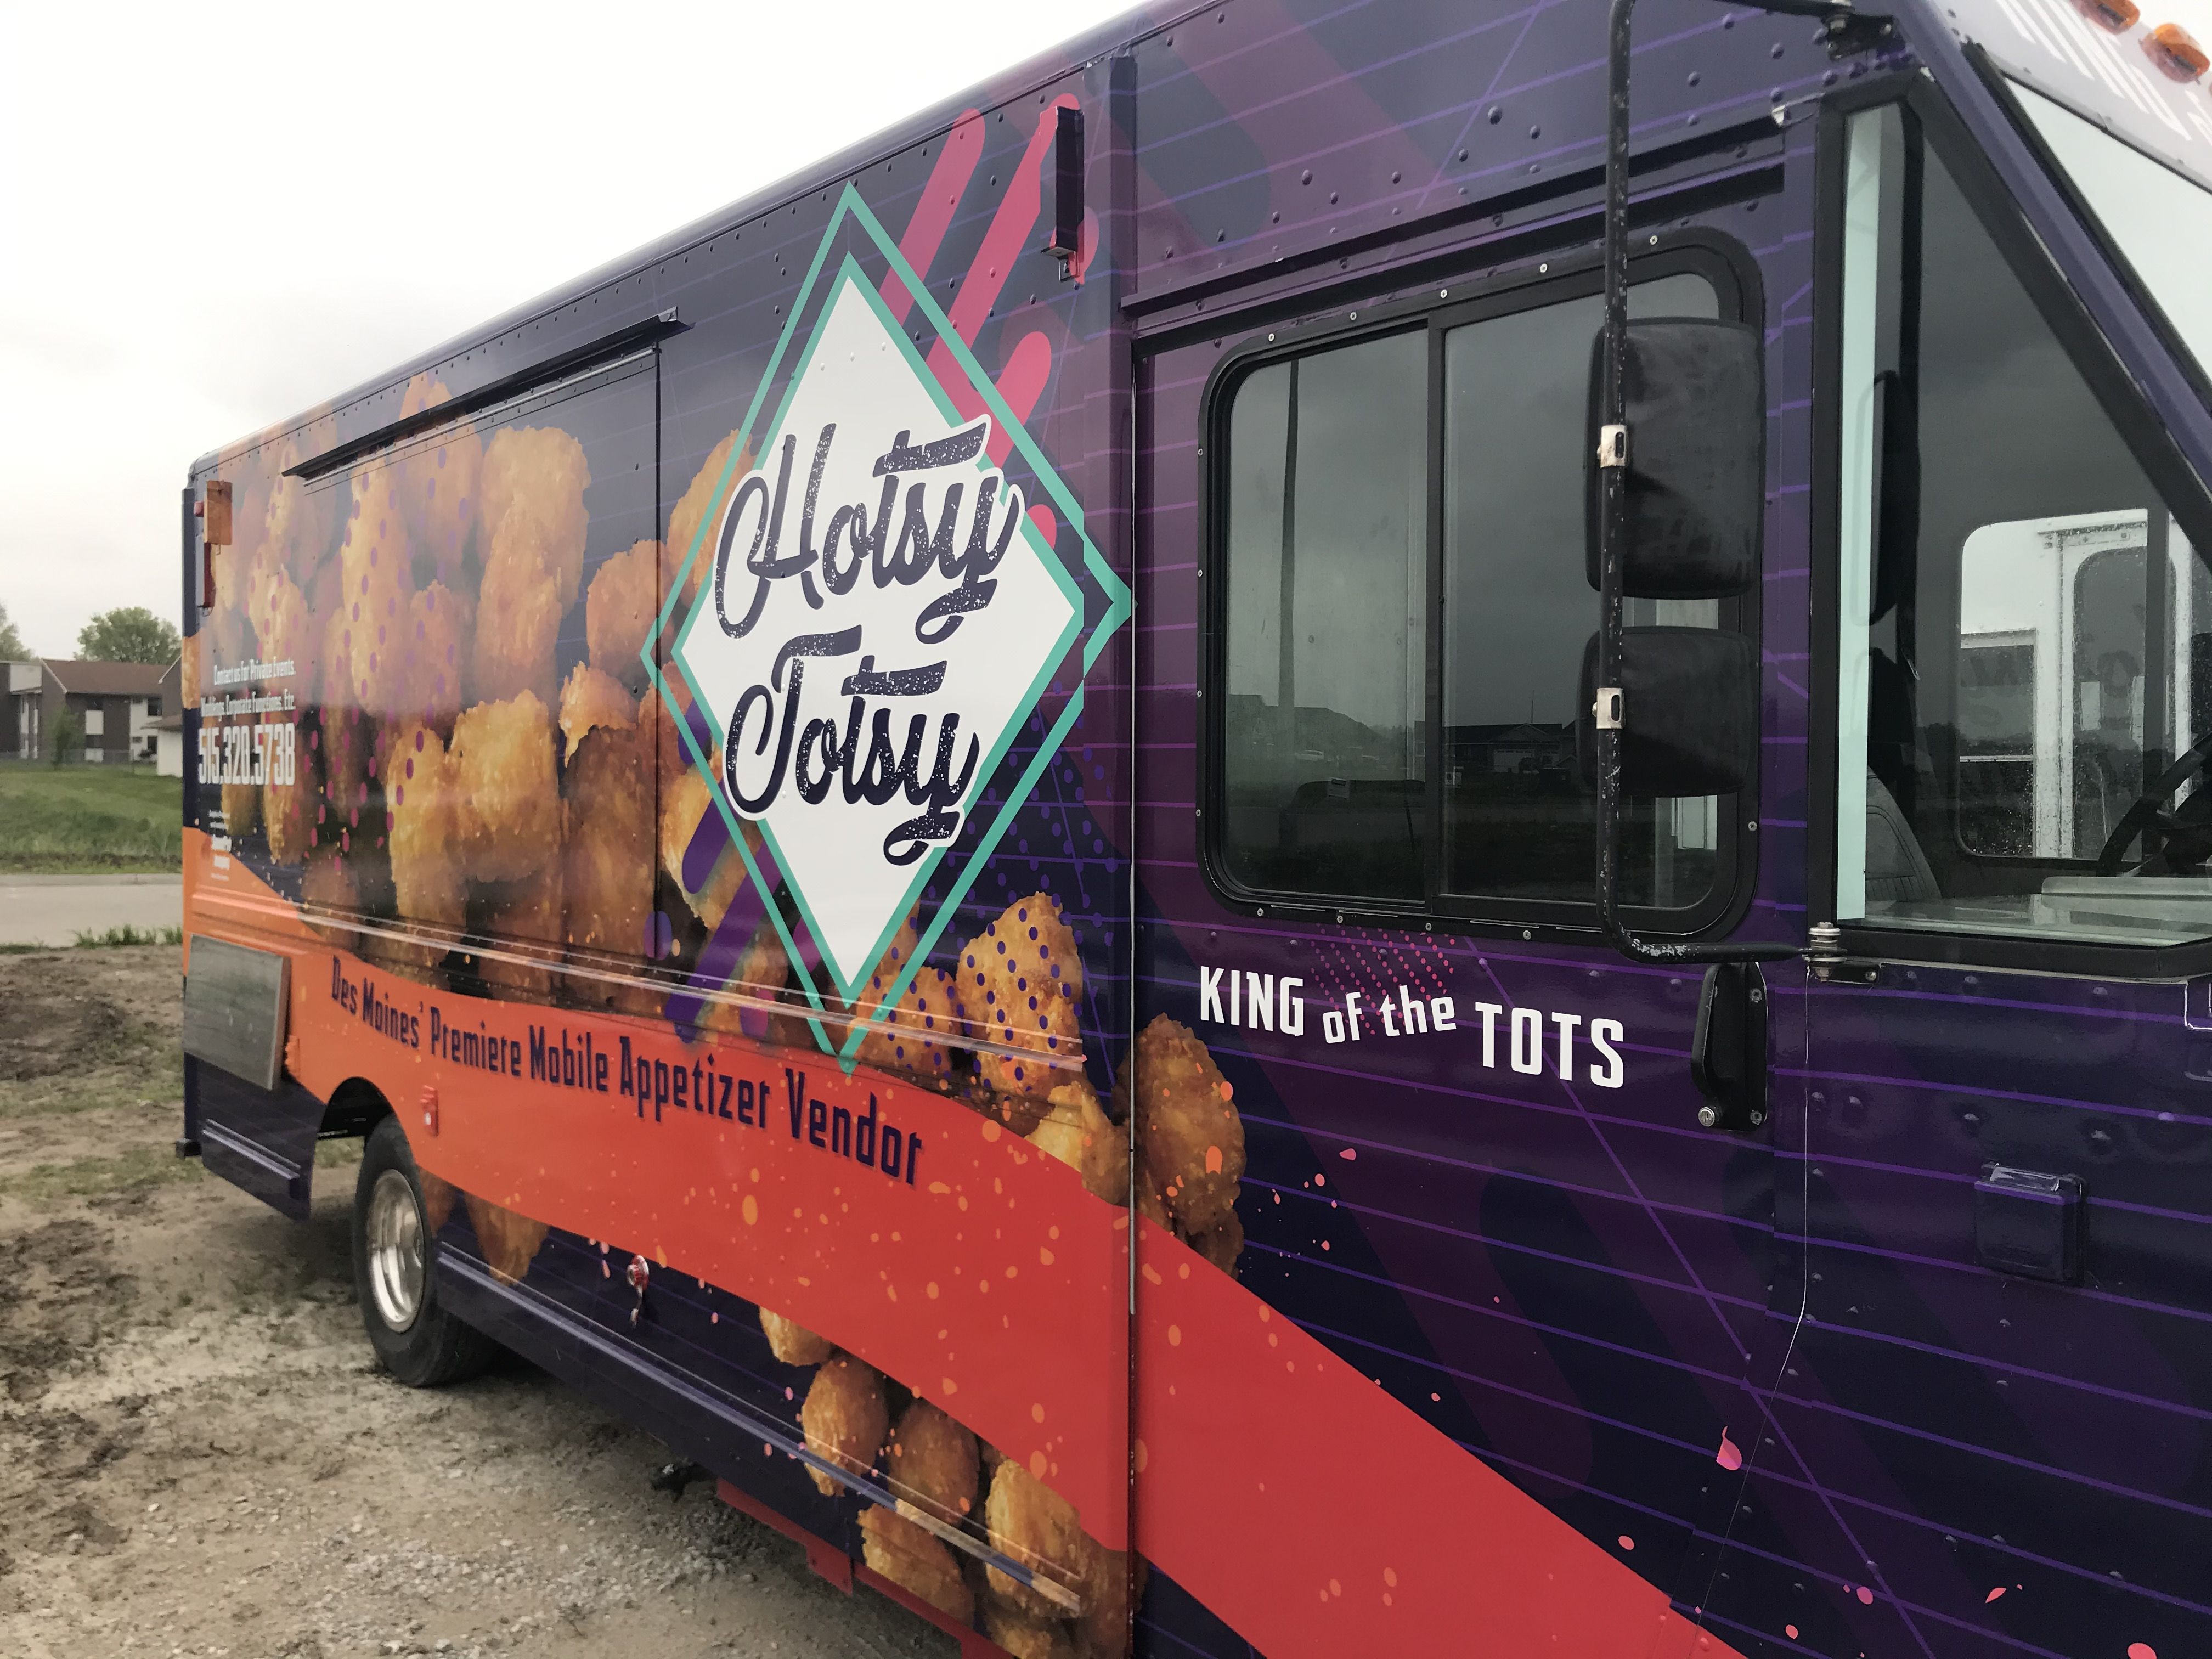 The outside of the Hotsy Totsy food truck